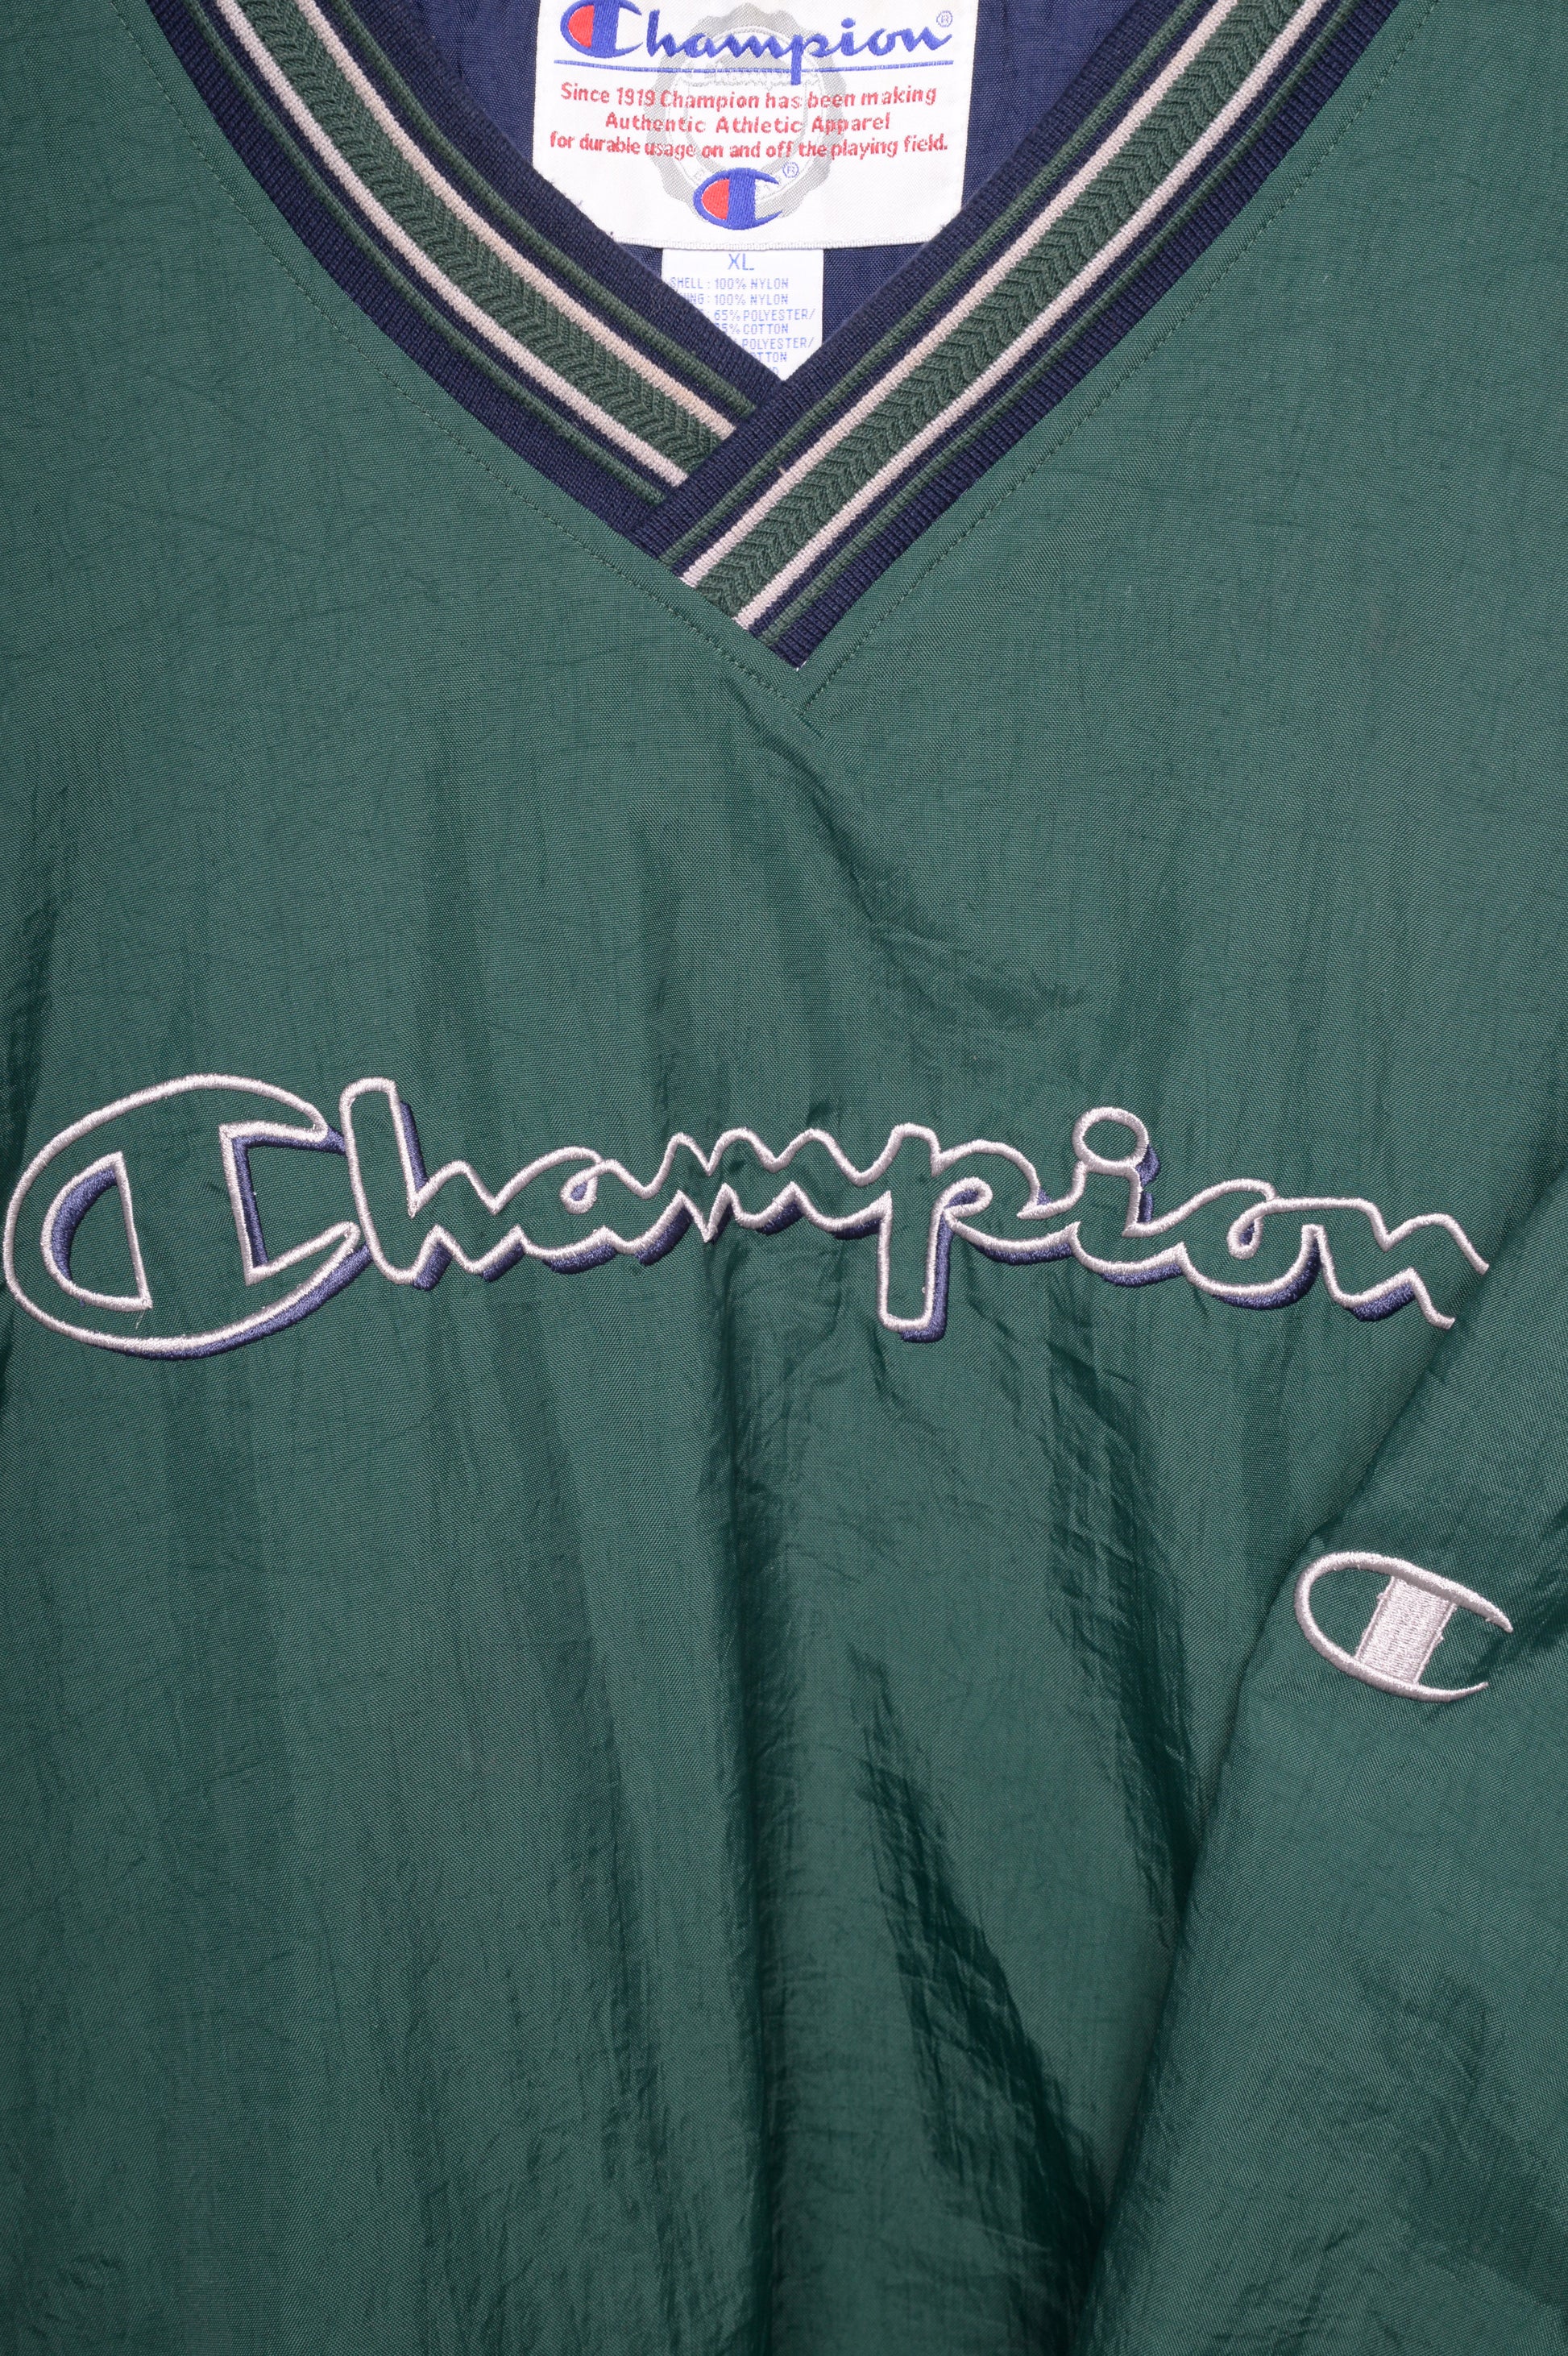 vintage champion sweatshirt